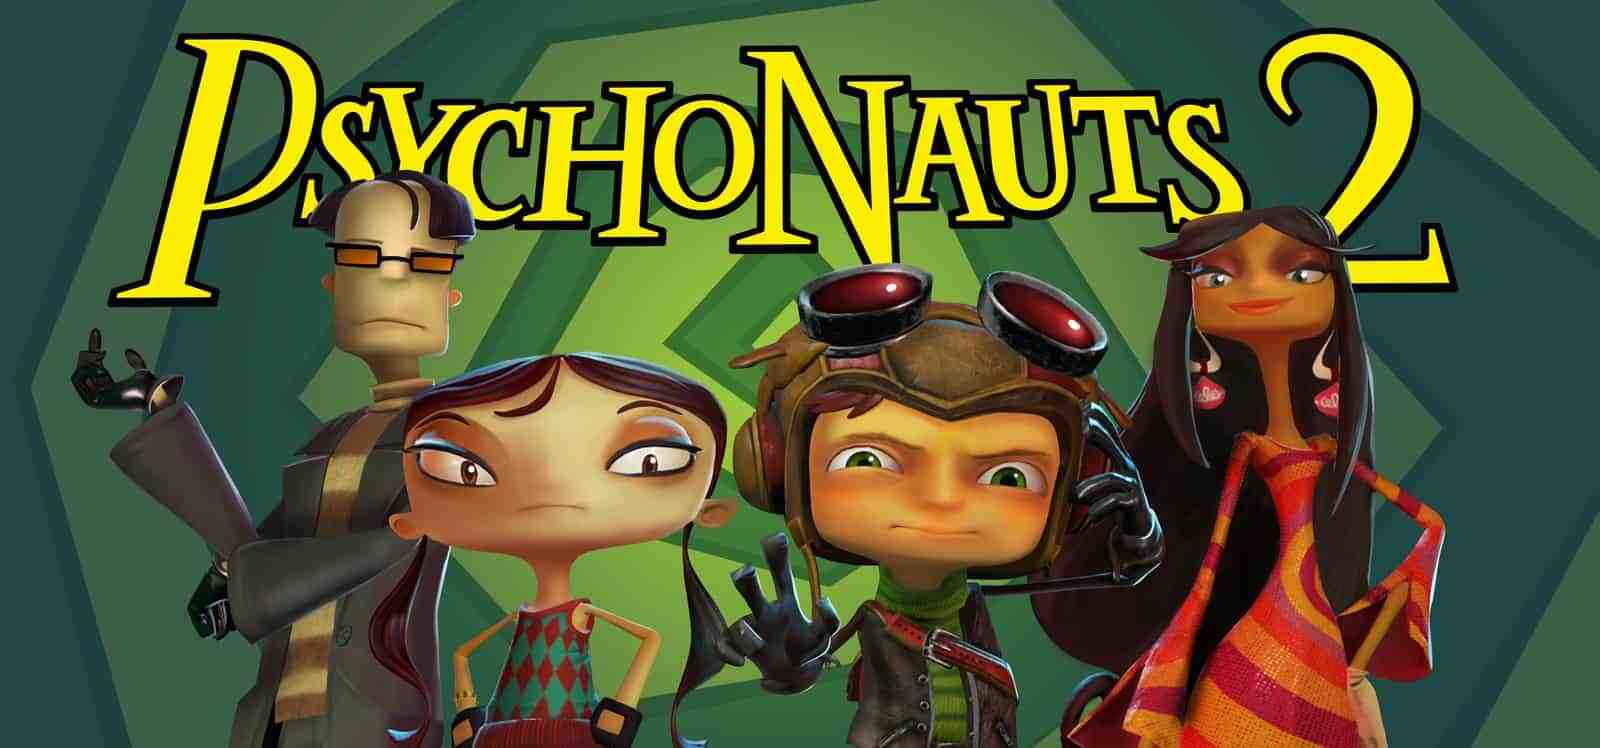 Psychonauts 2 game banner image